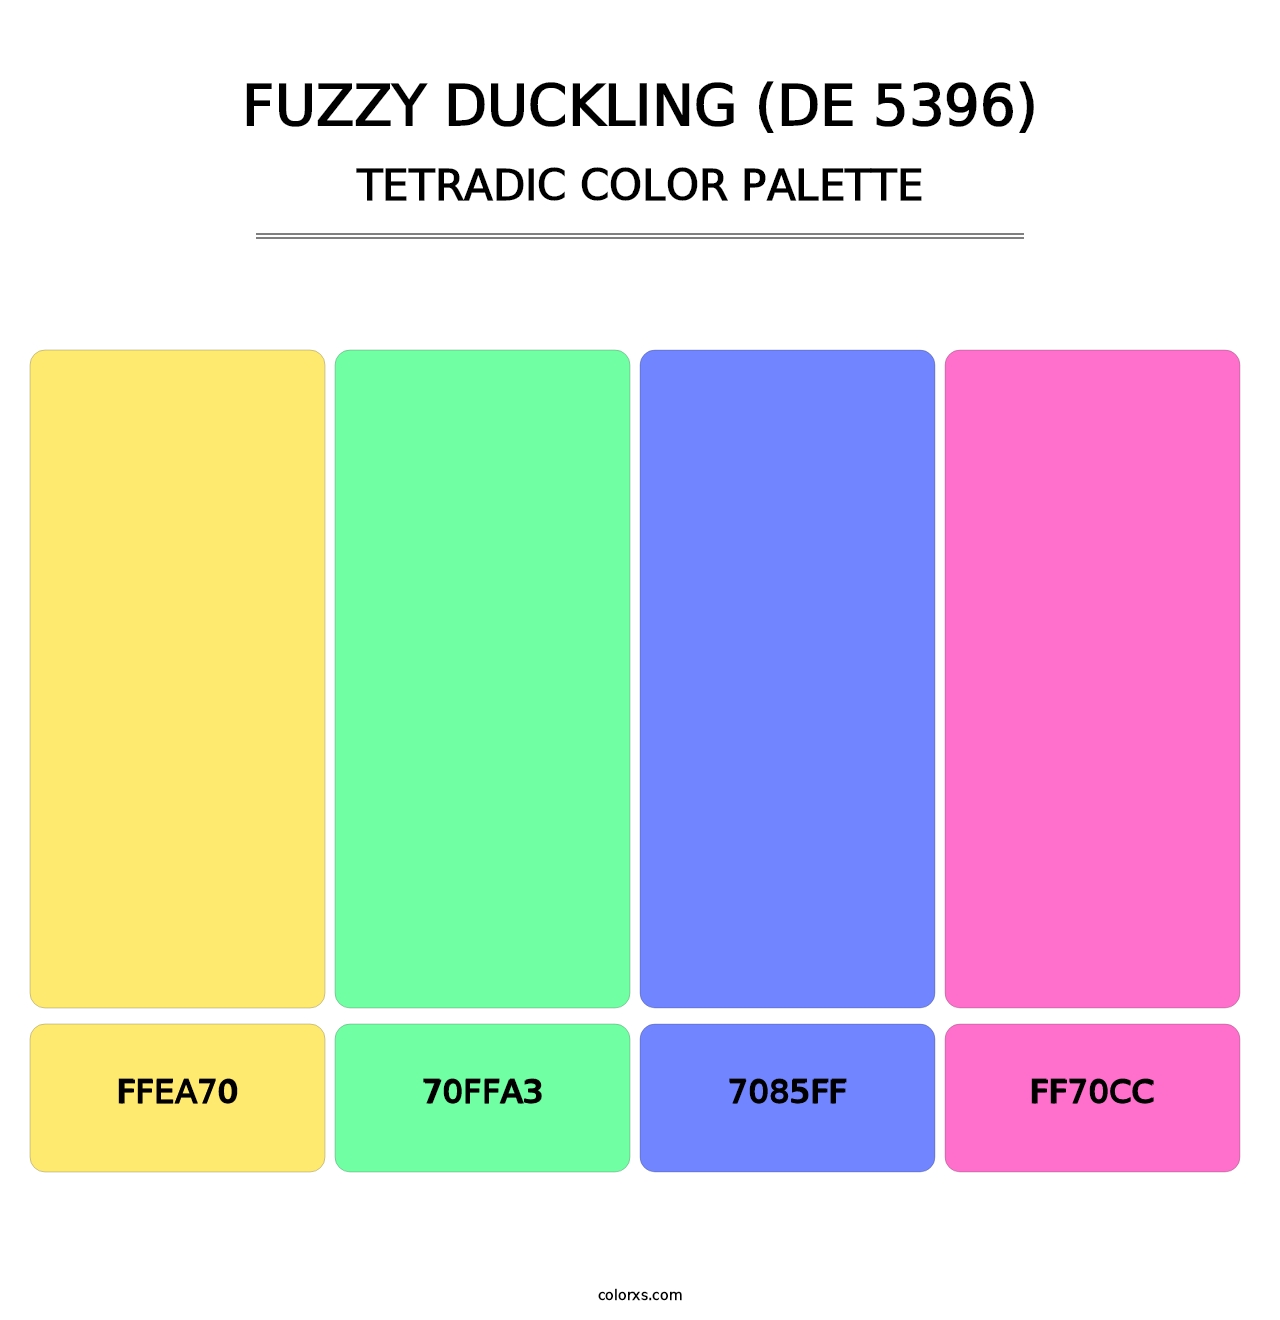 Fuzzy Duckling (DE 5396) - Tetradic Color Palette